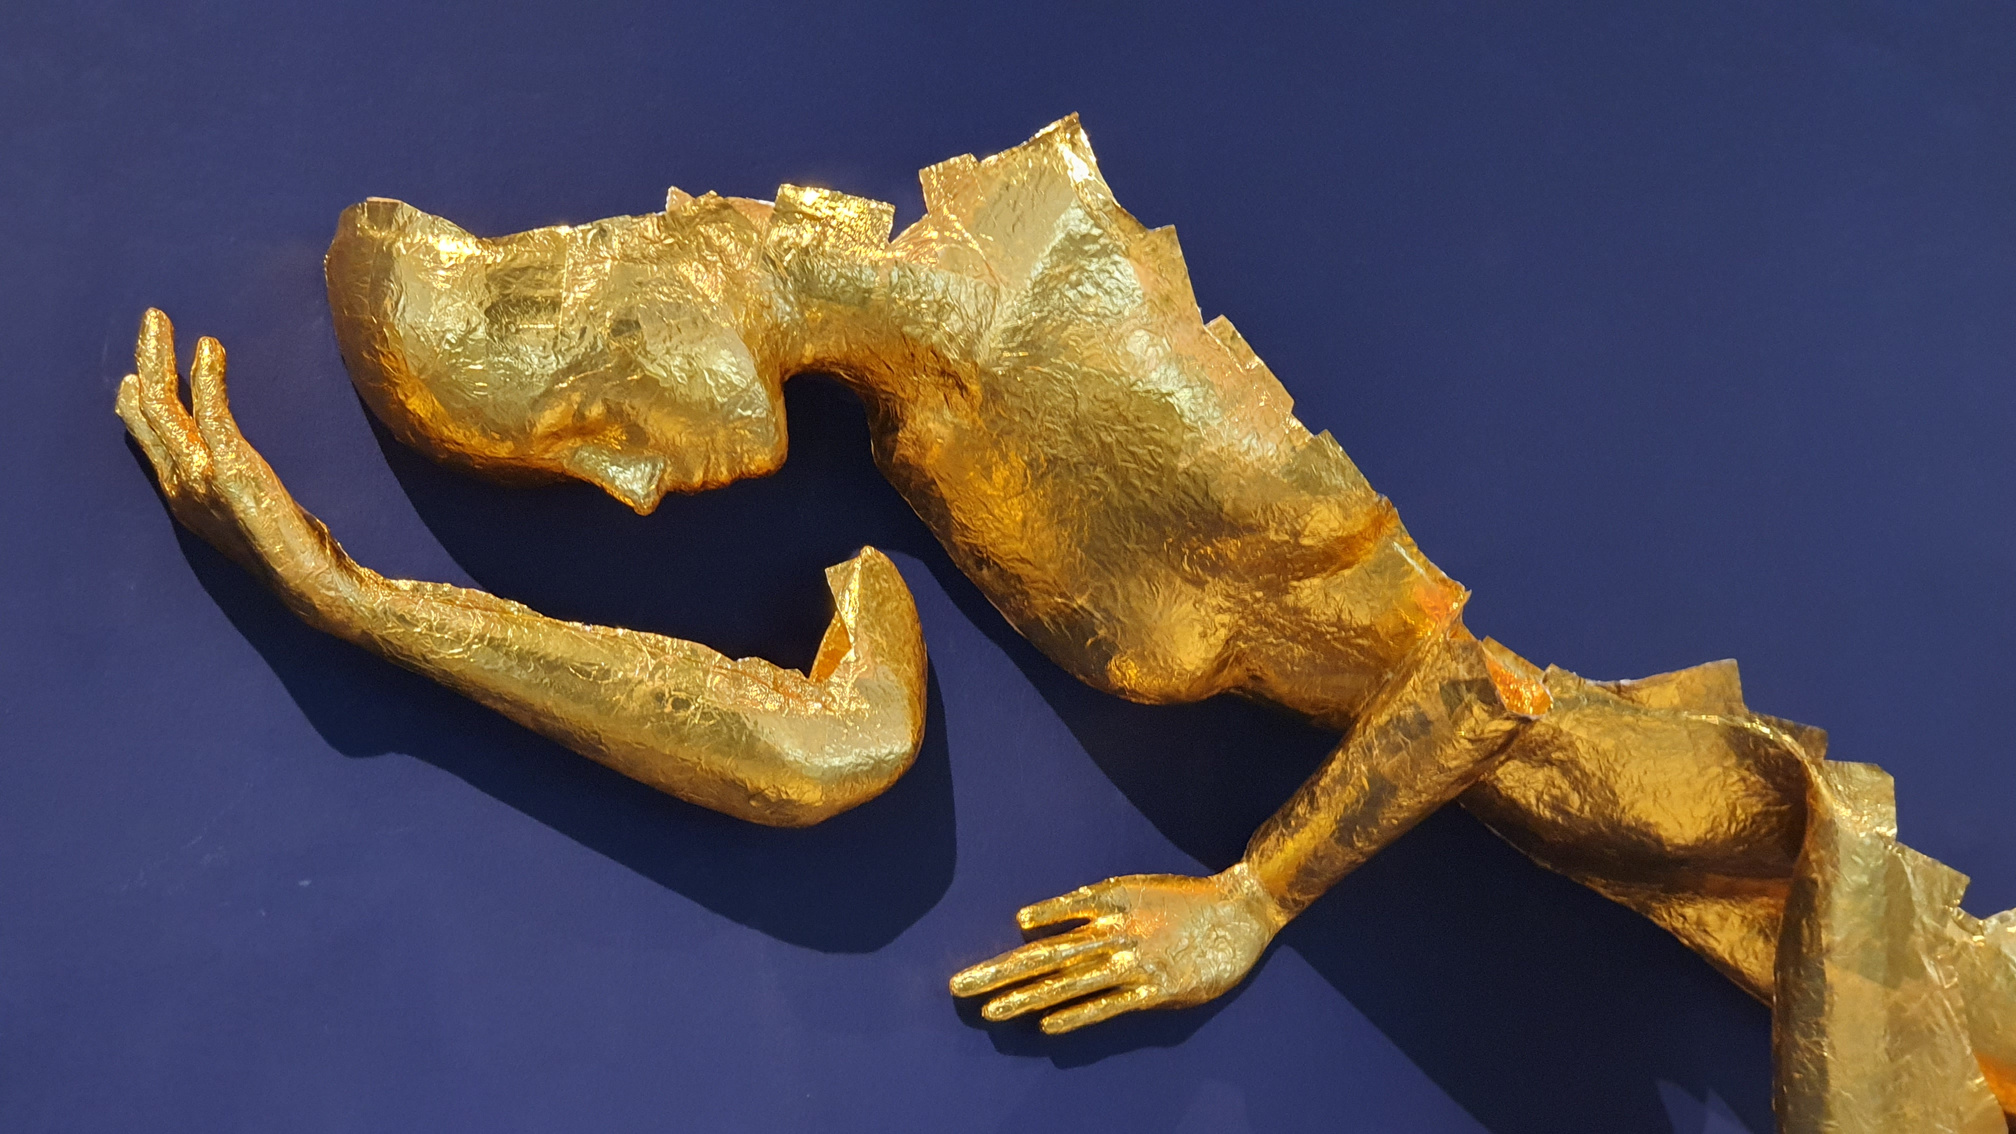 Golden foil paper covering 3D printed human sculpture